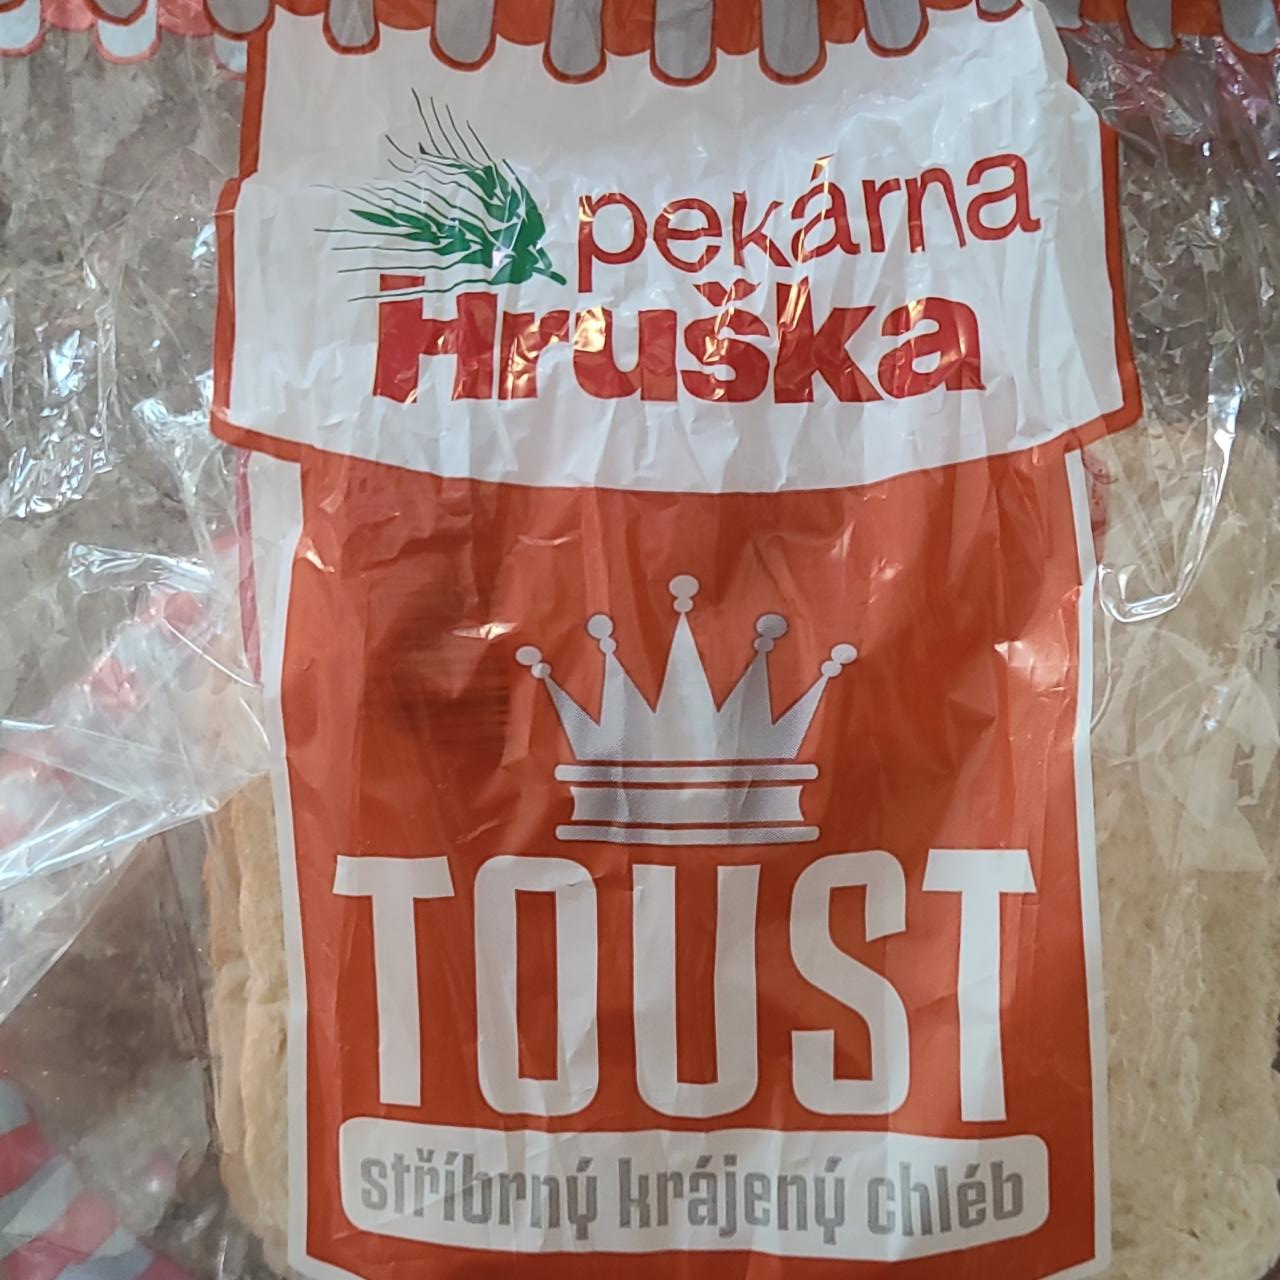 Fotografie - Toust stříbrný krájený chléb pekárna Hruška